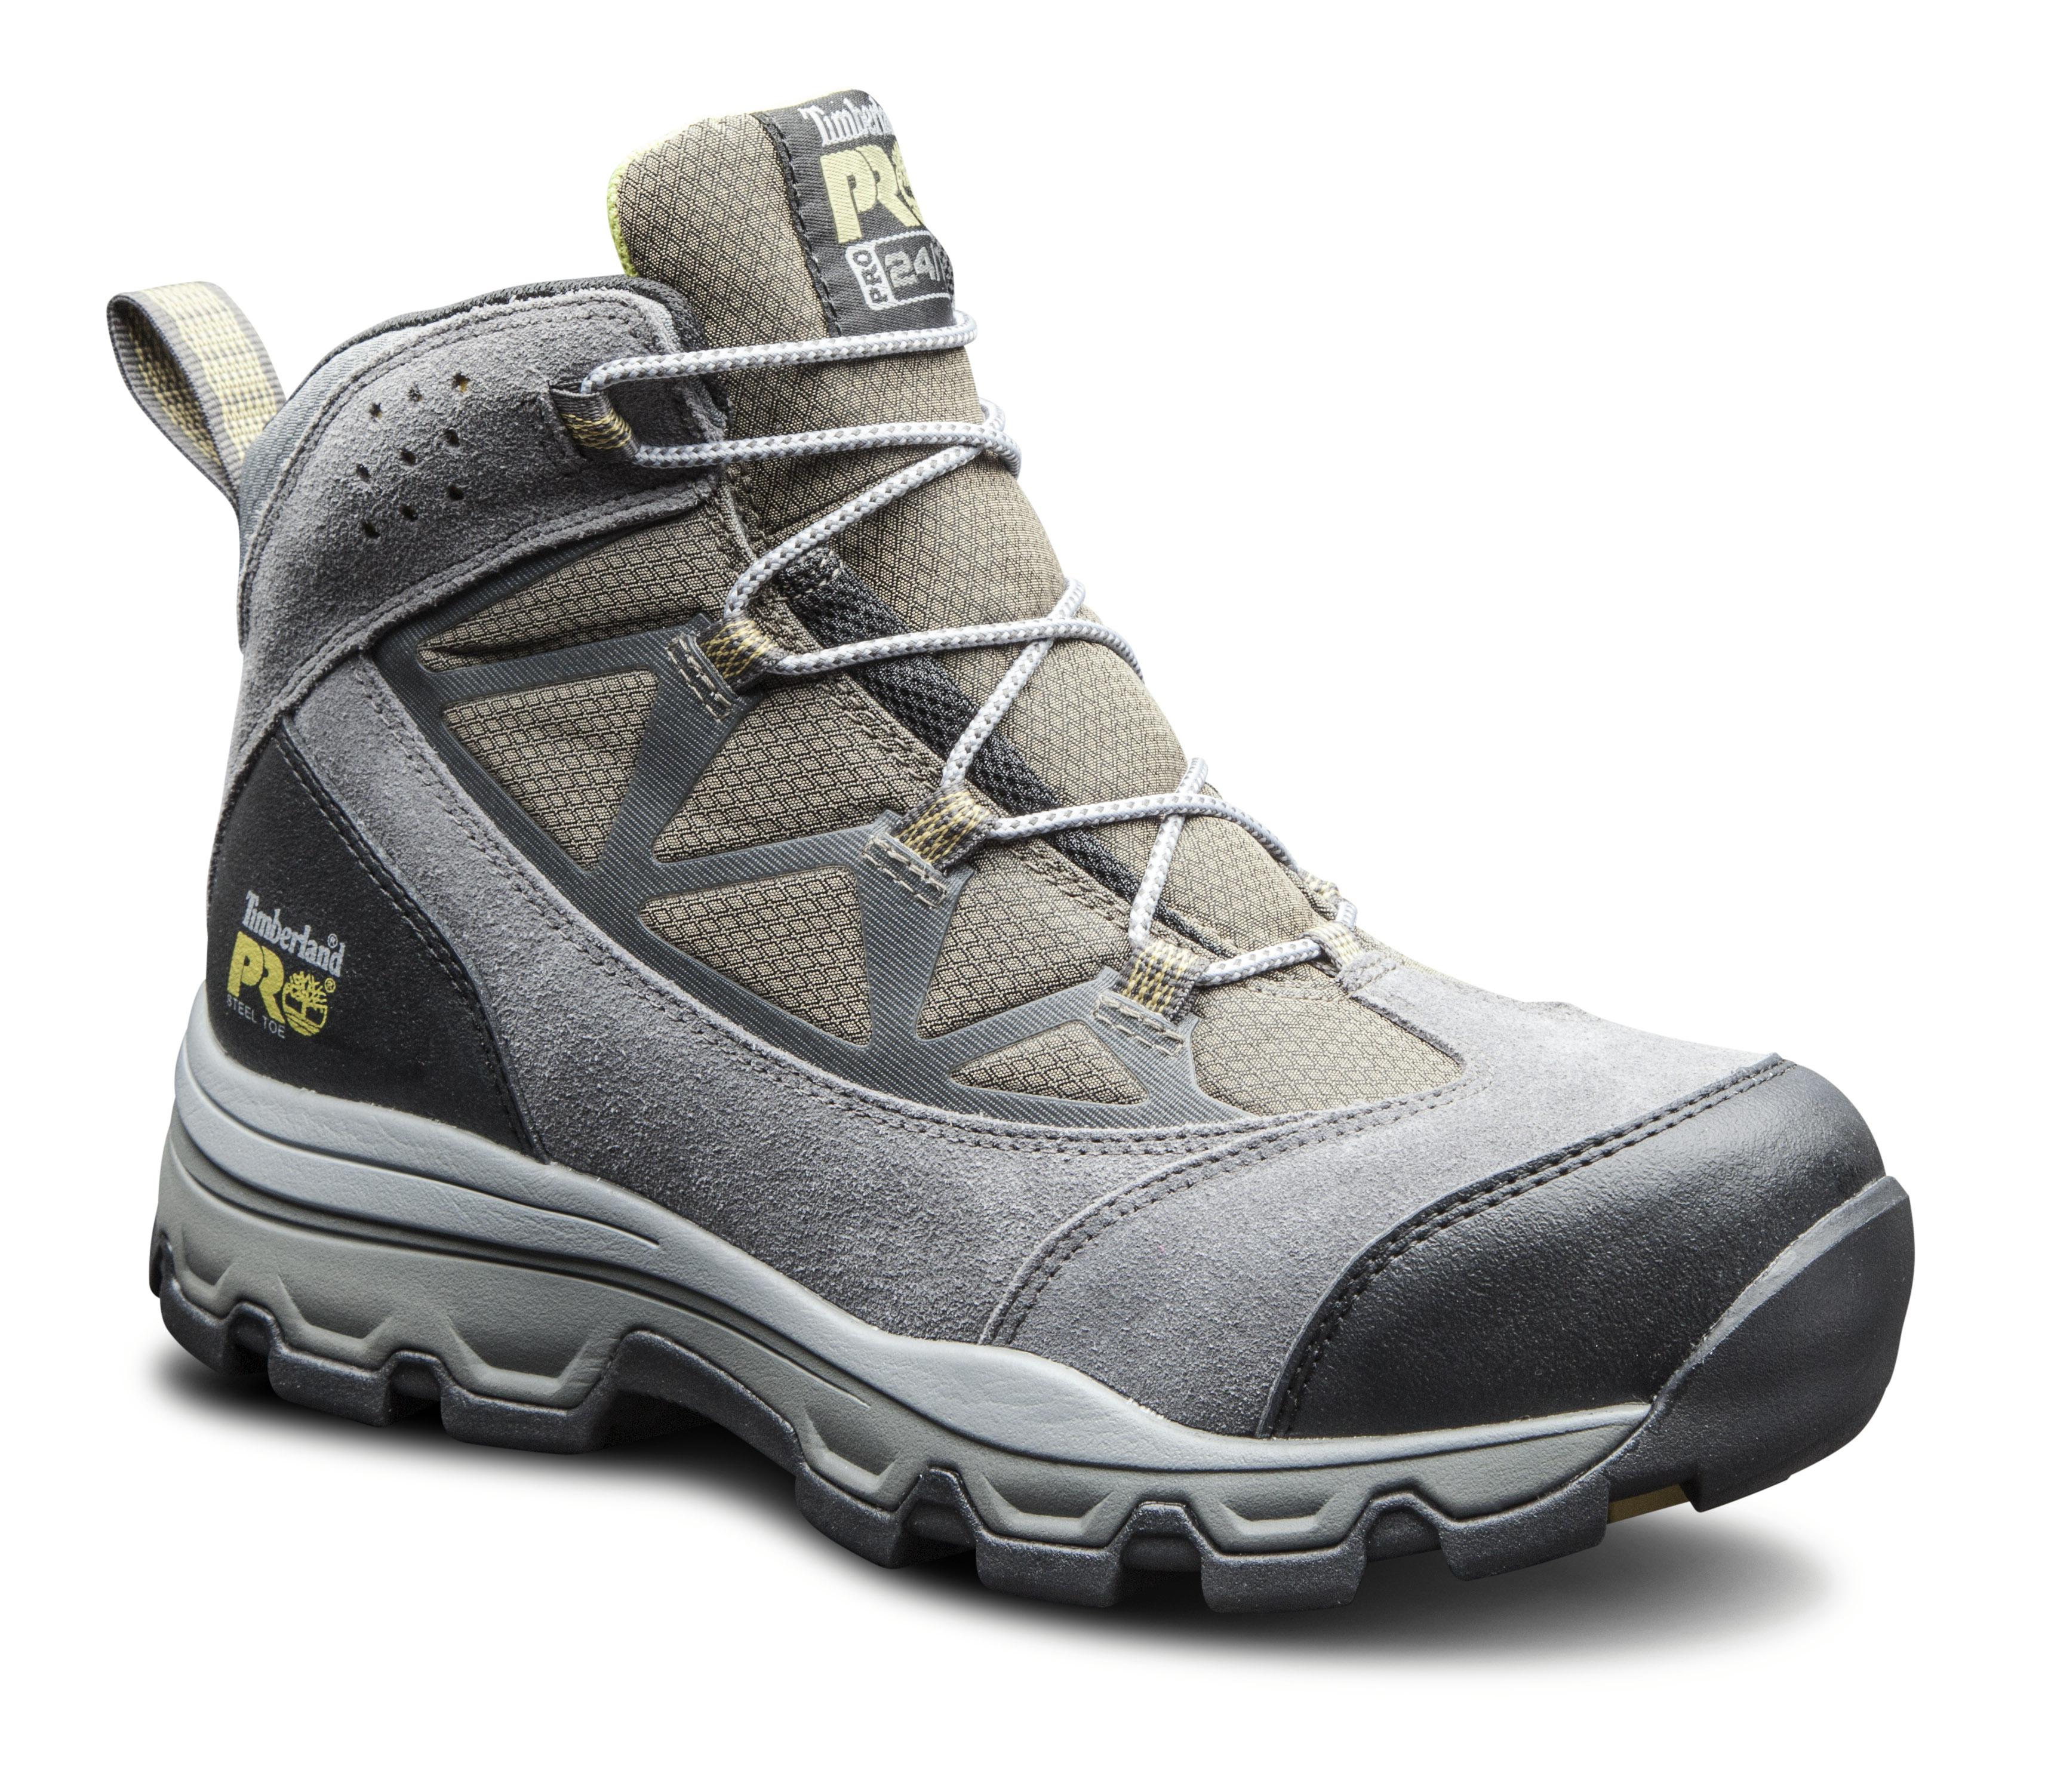 Timberland PRO Women's Rockscape Gray Steel Toe Work Boot - Wide Width Available